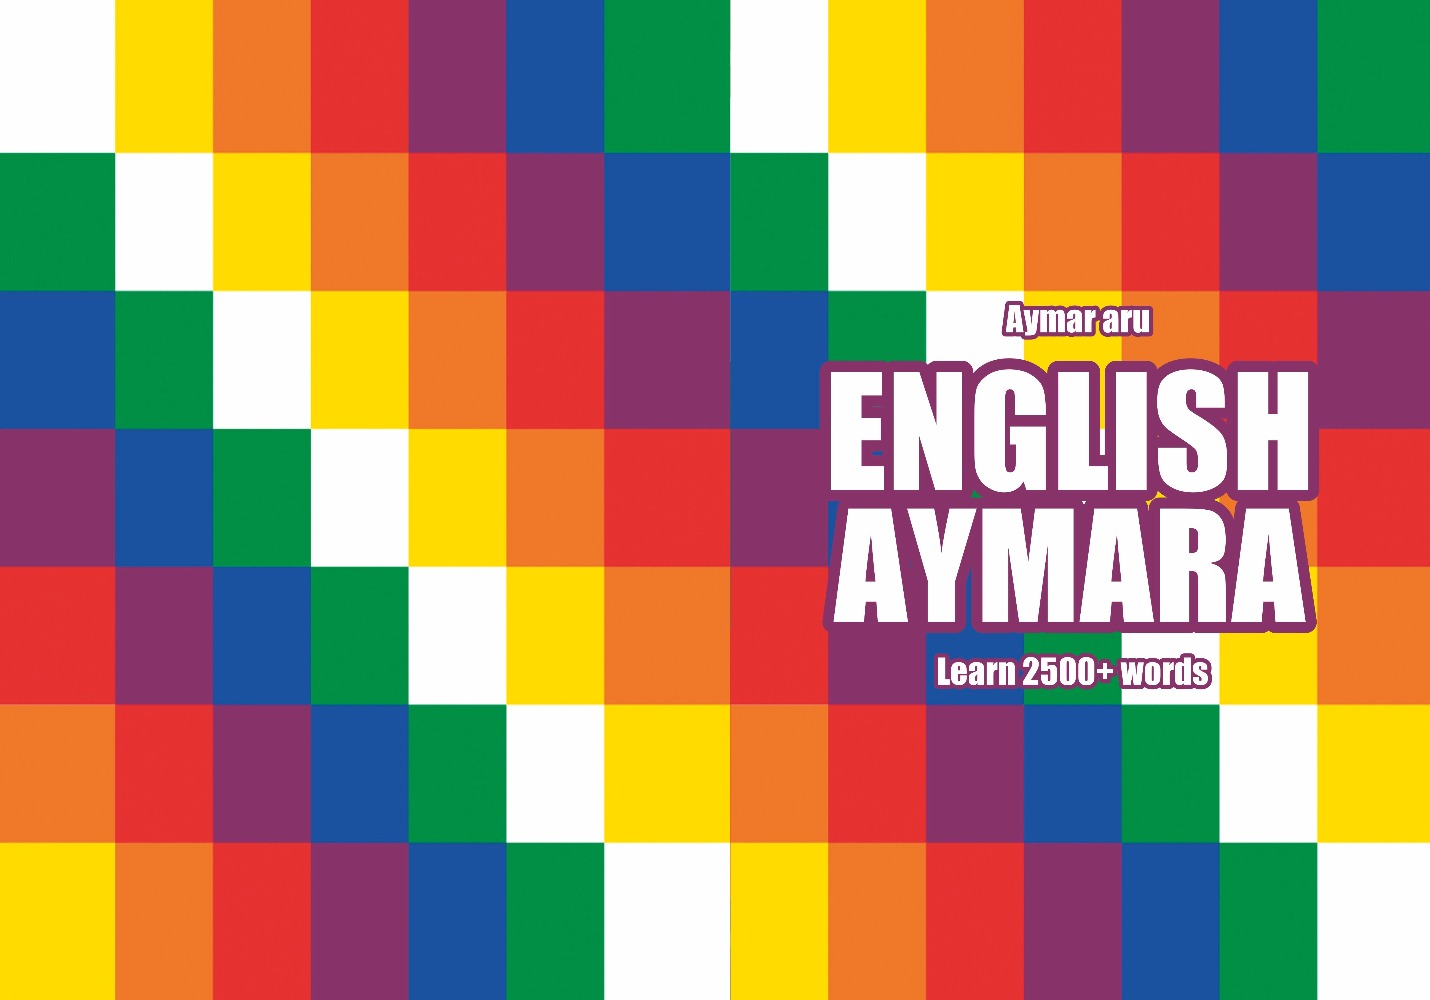 Aymara language learning notebook cover